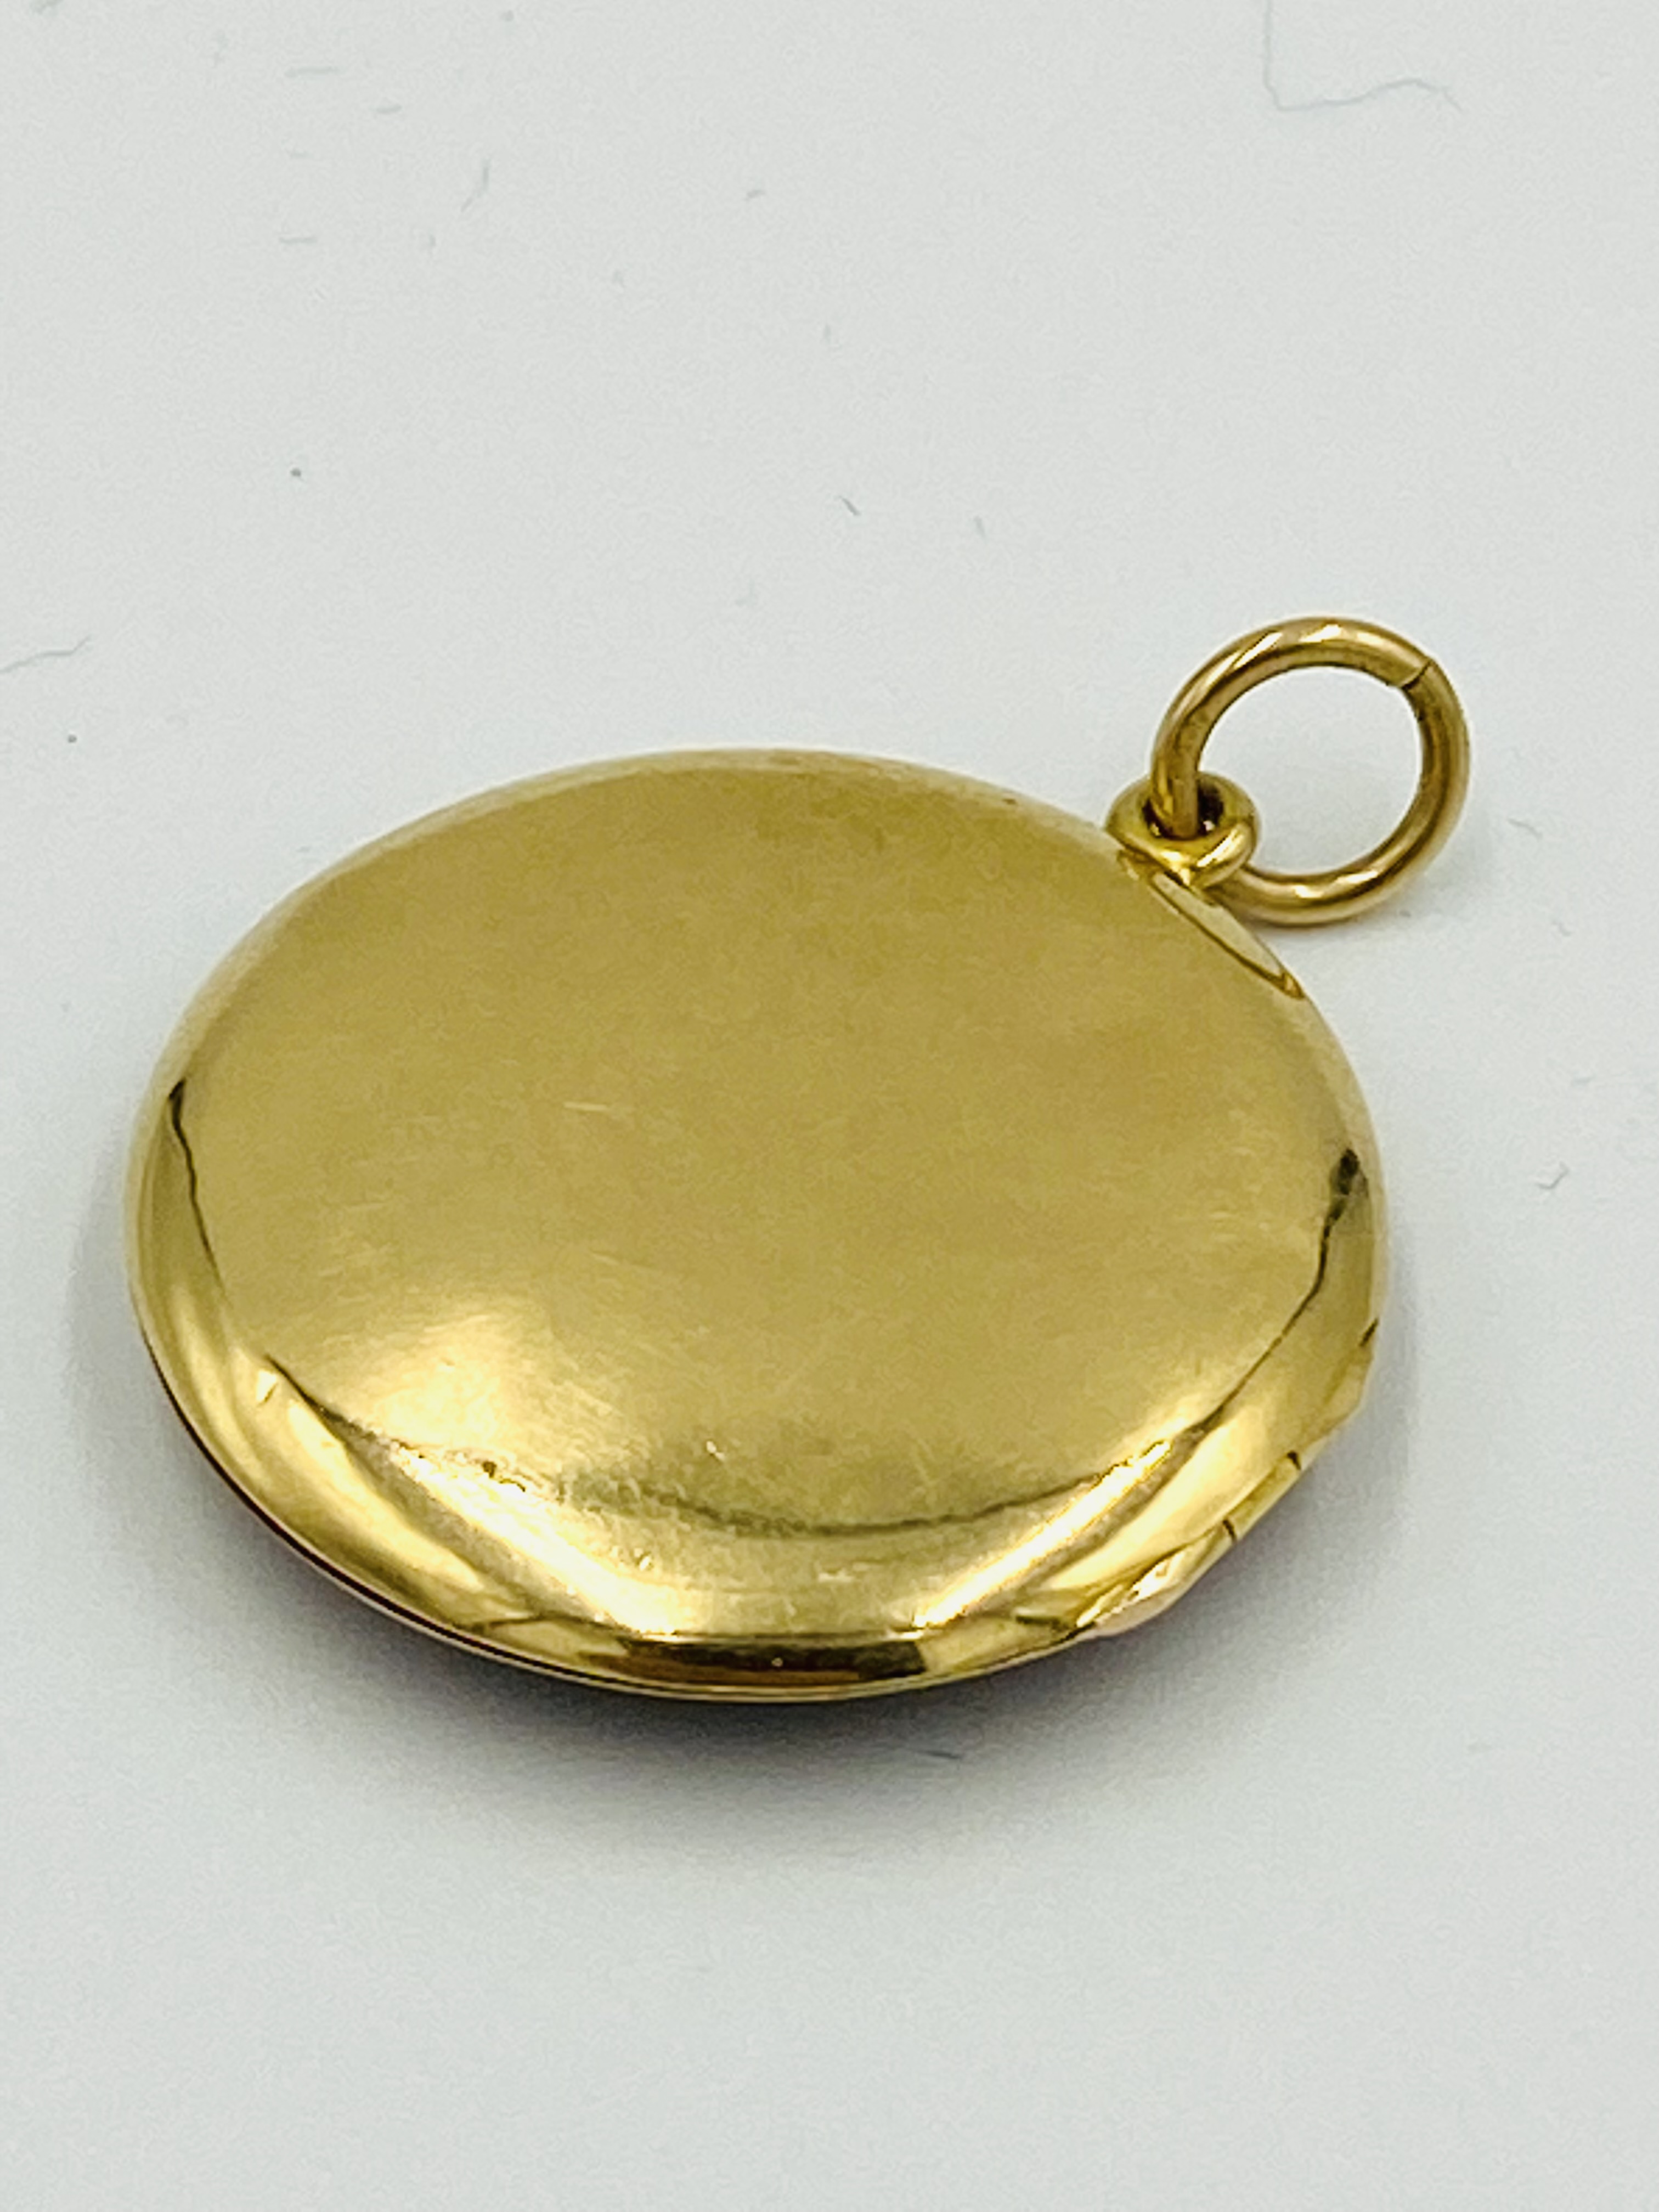 18ct, diamond and enamel locket/pendant - Image 3 of 4